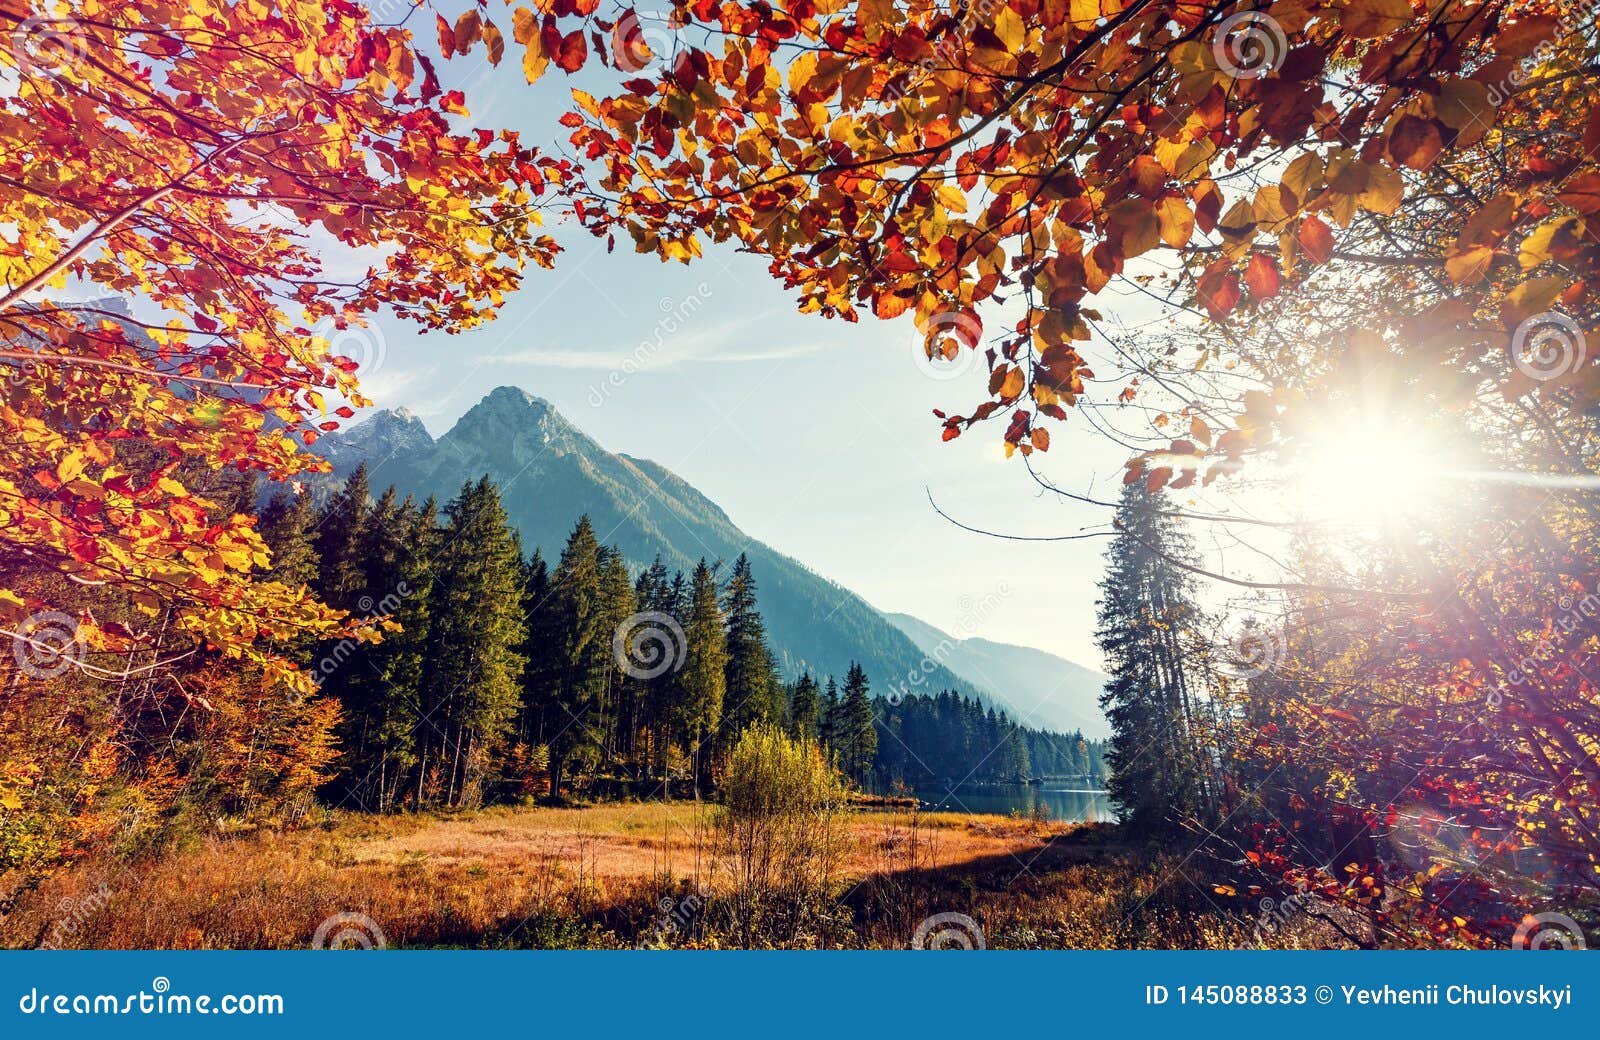 Amazing Sunset on Mountain Lake in Forest Stock Image - Image of autumn, landscape: 145088833